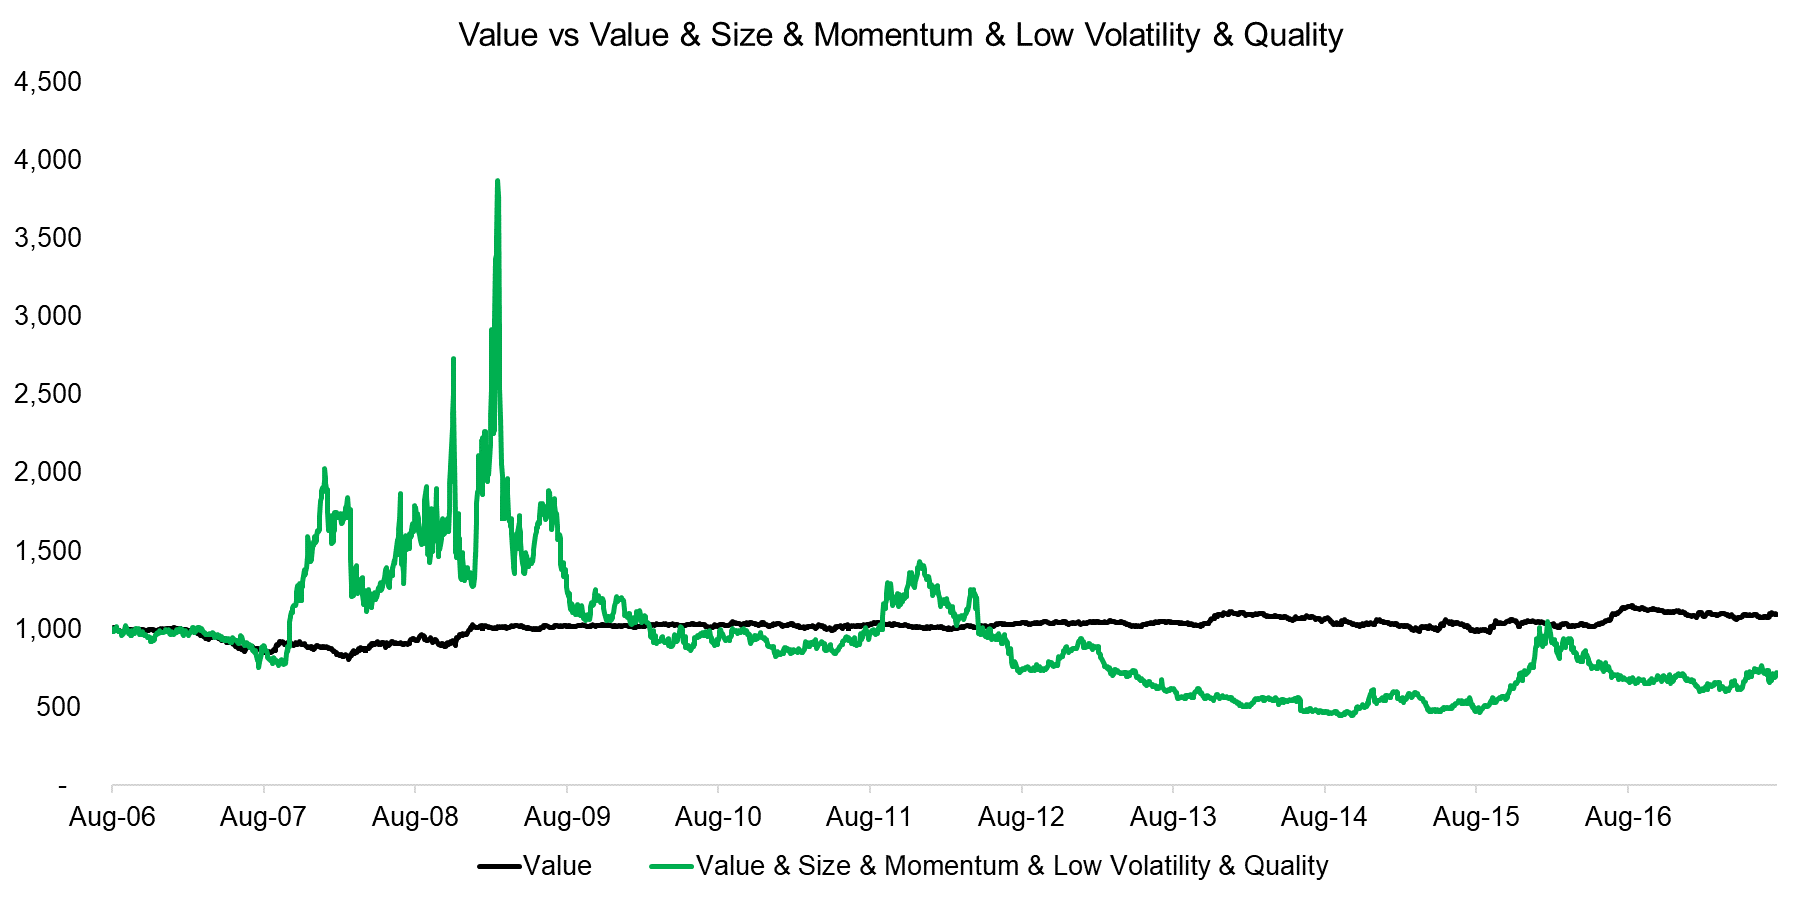 Value vs Value & Size & Momentum & Low Volatility & Quality